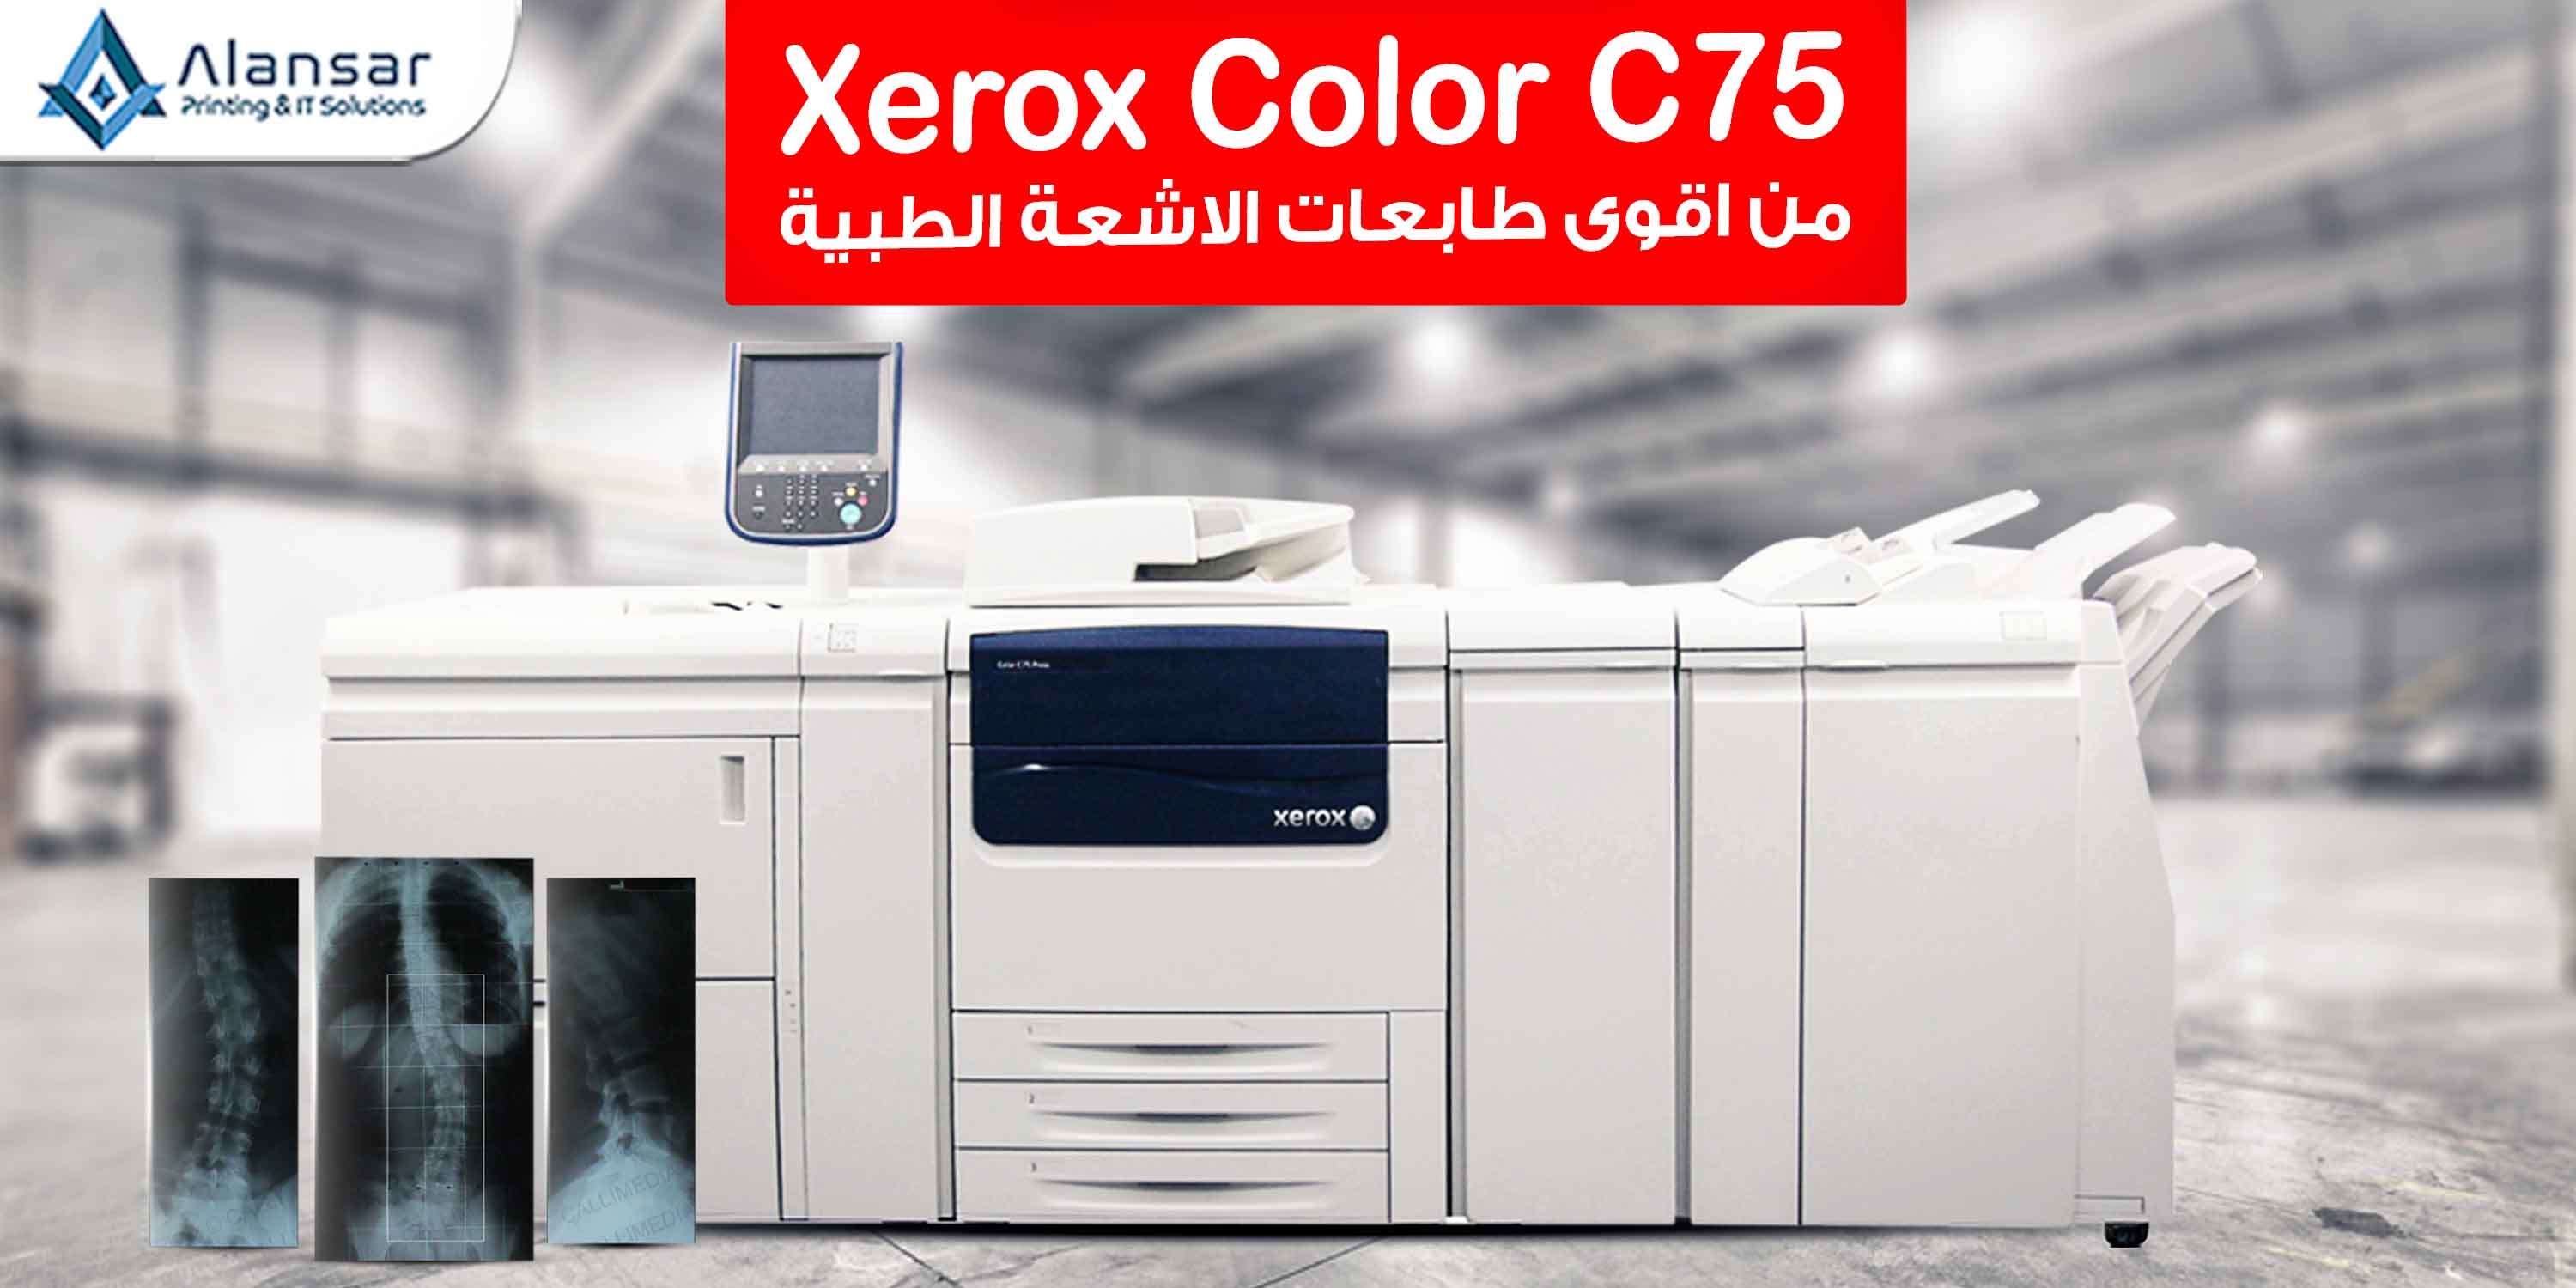 Xerox C75 strongest radiology printer